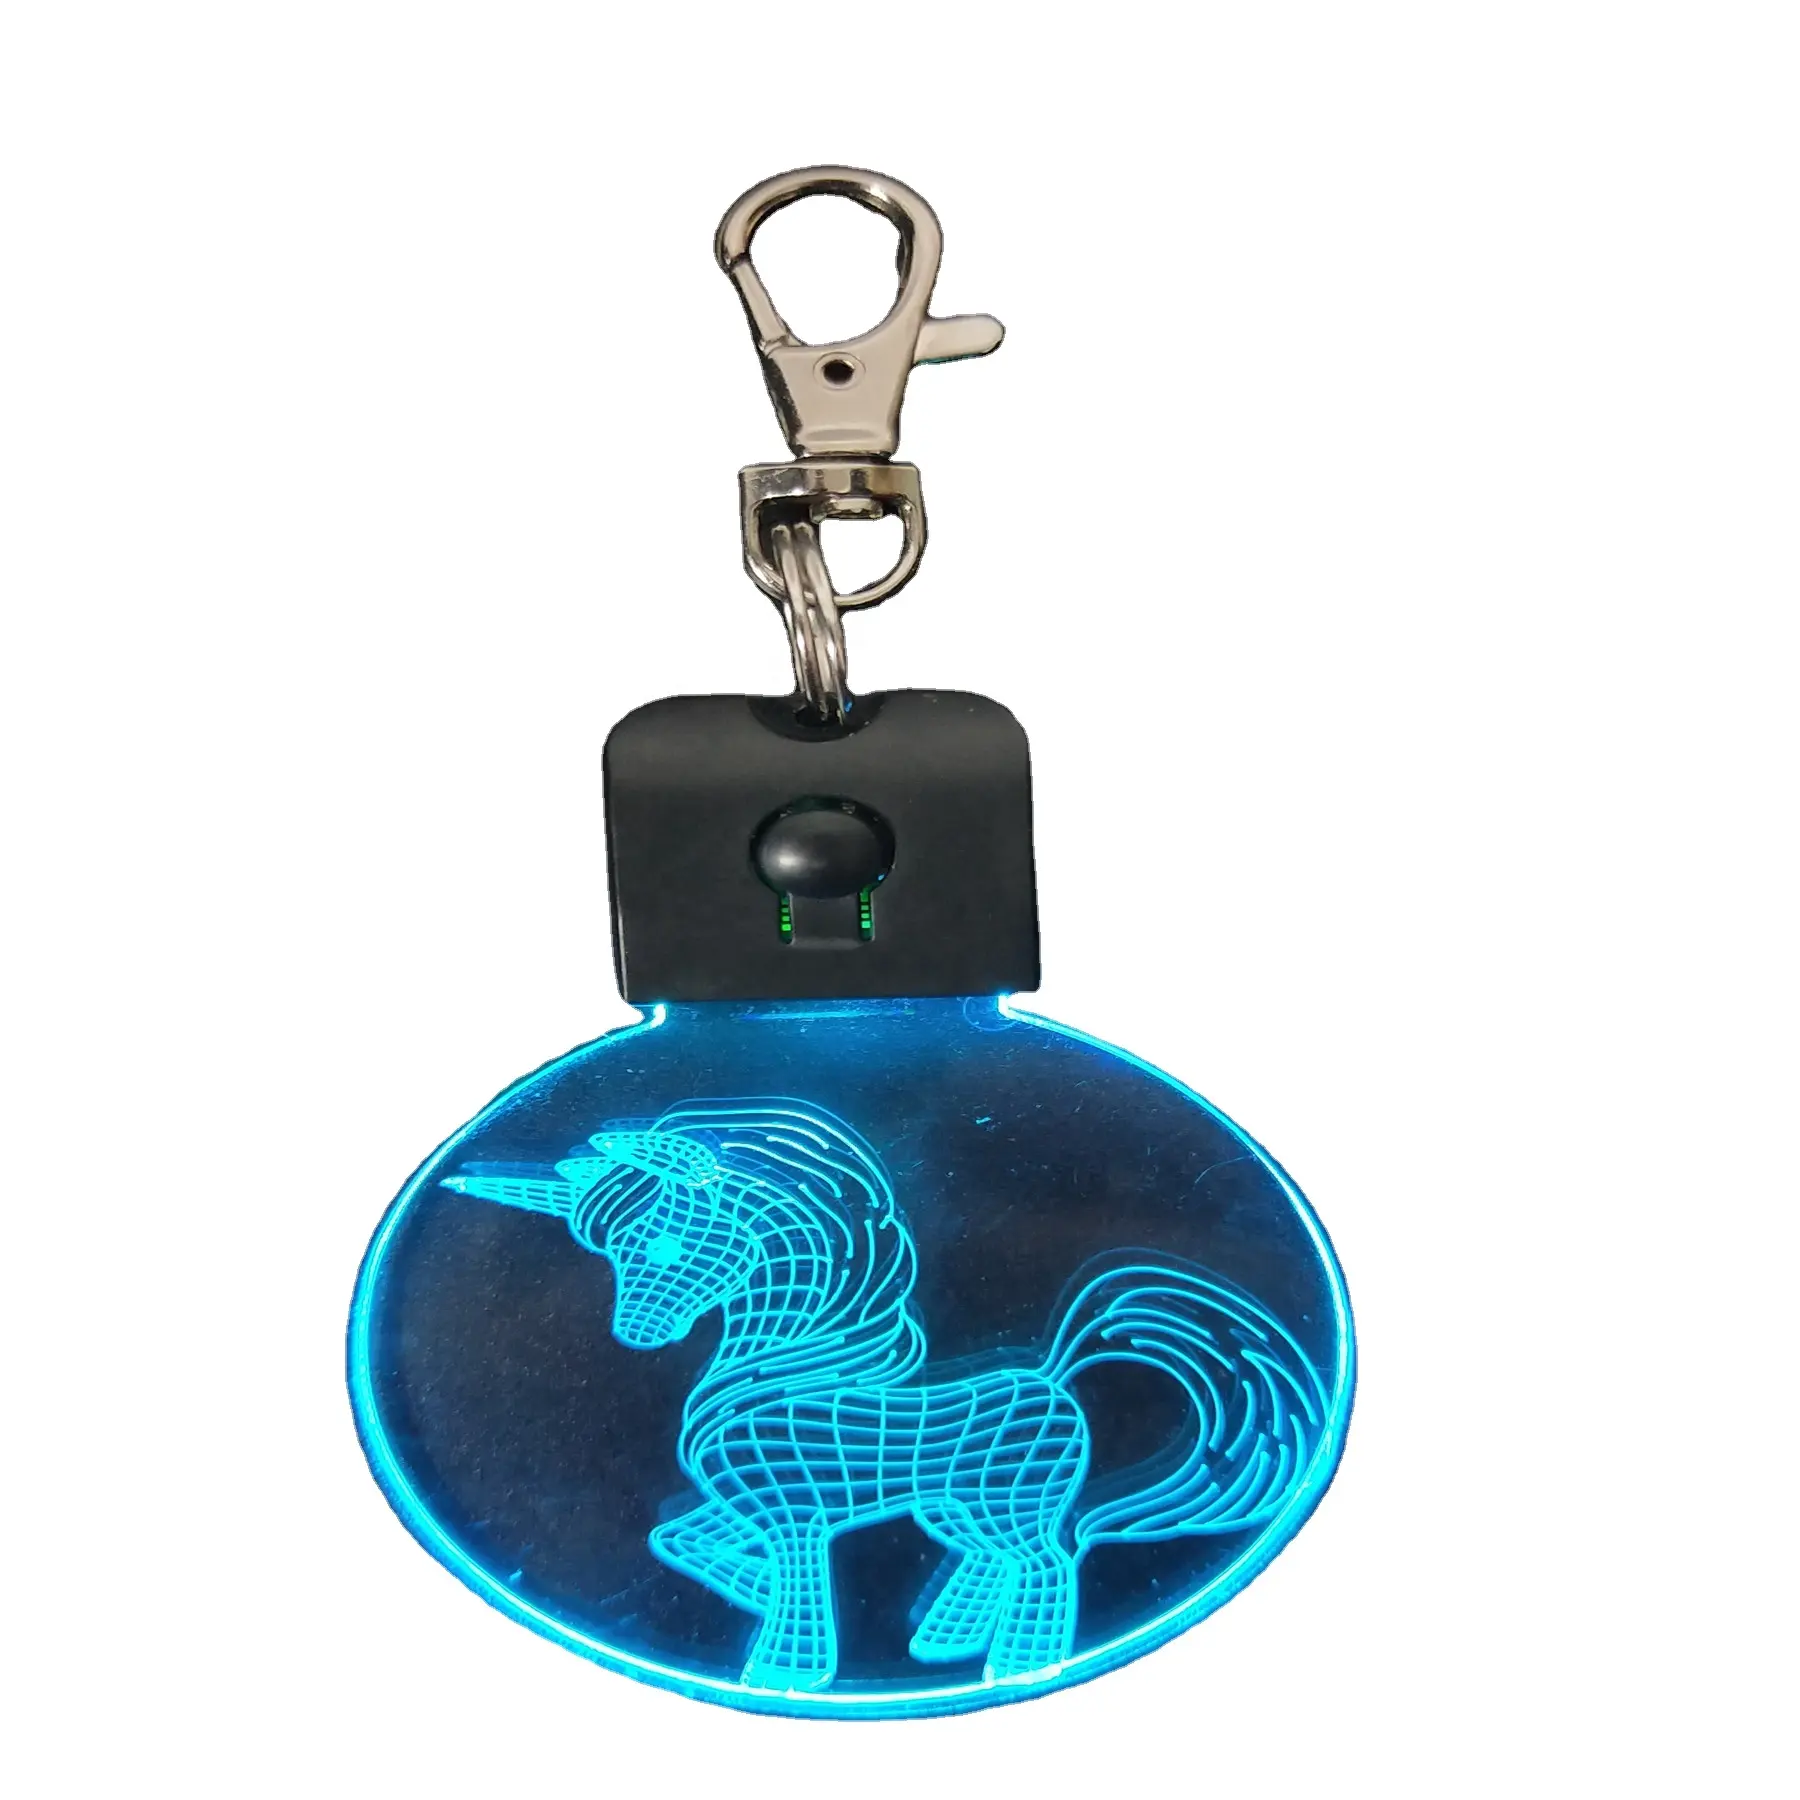 Laser Engraved Unicorn 3D design acrylic led kechain flashlight custom keychain with metal keyring for birthday holiday gift